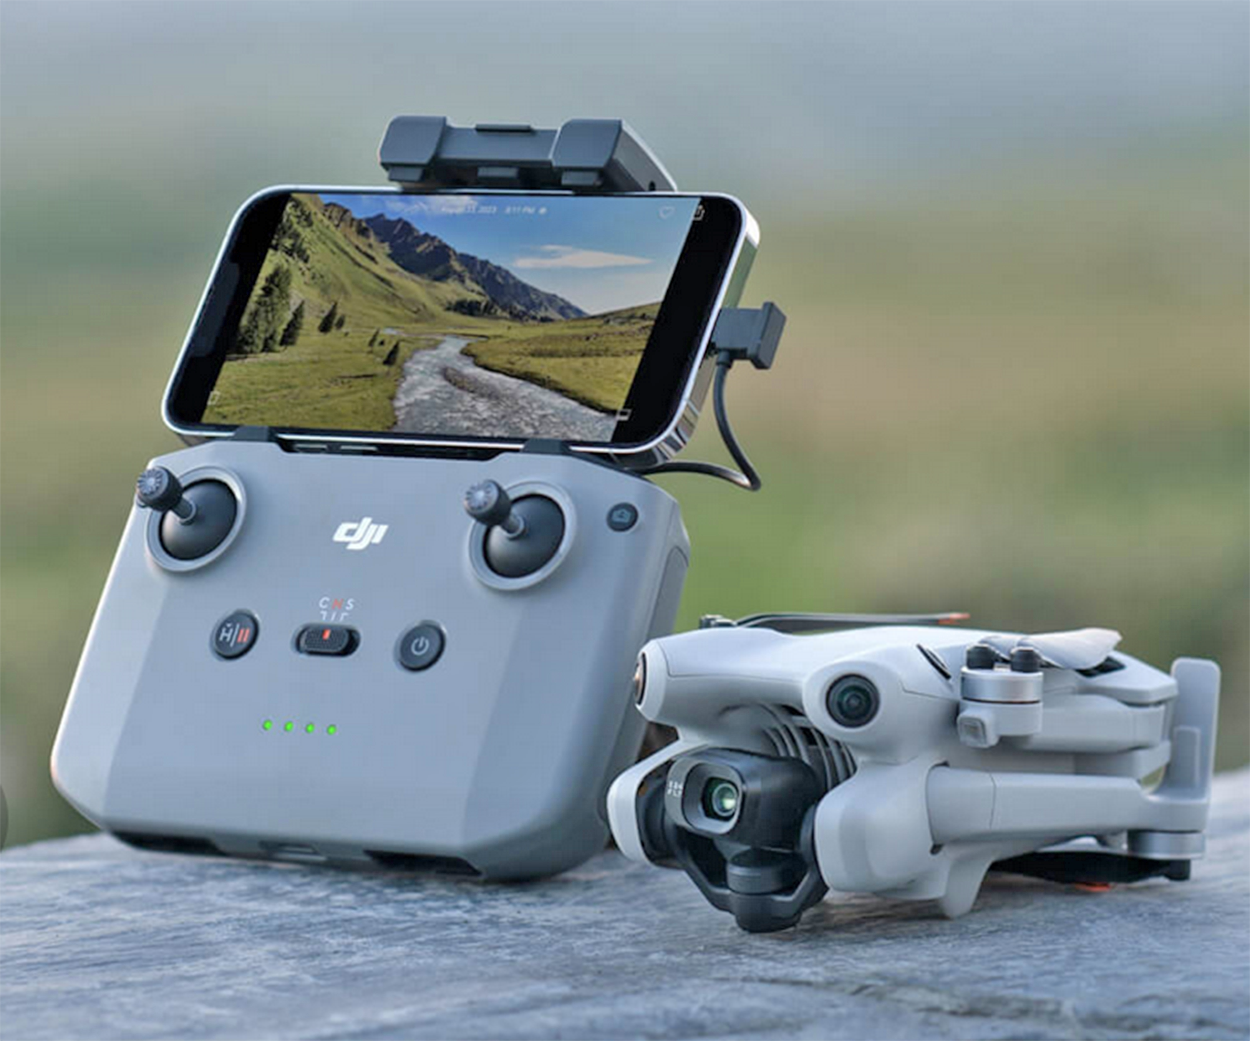 Dji mini 2: mini dron con cámara 4K de grandes prestaciones